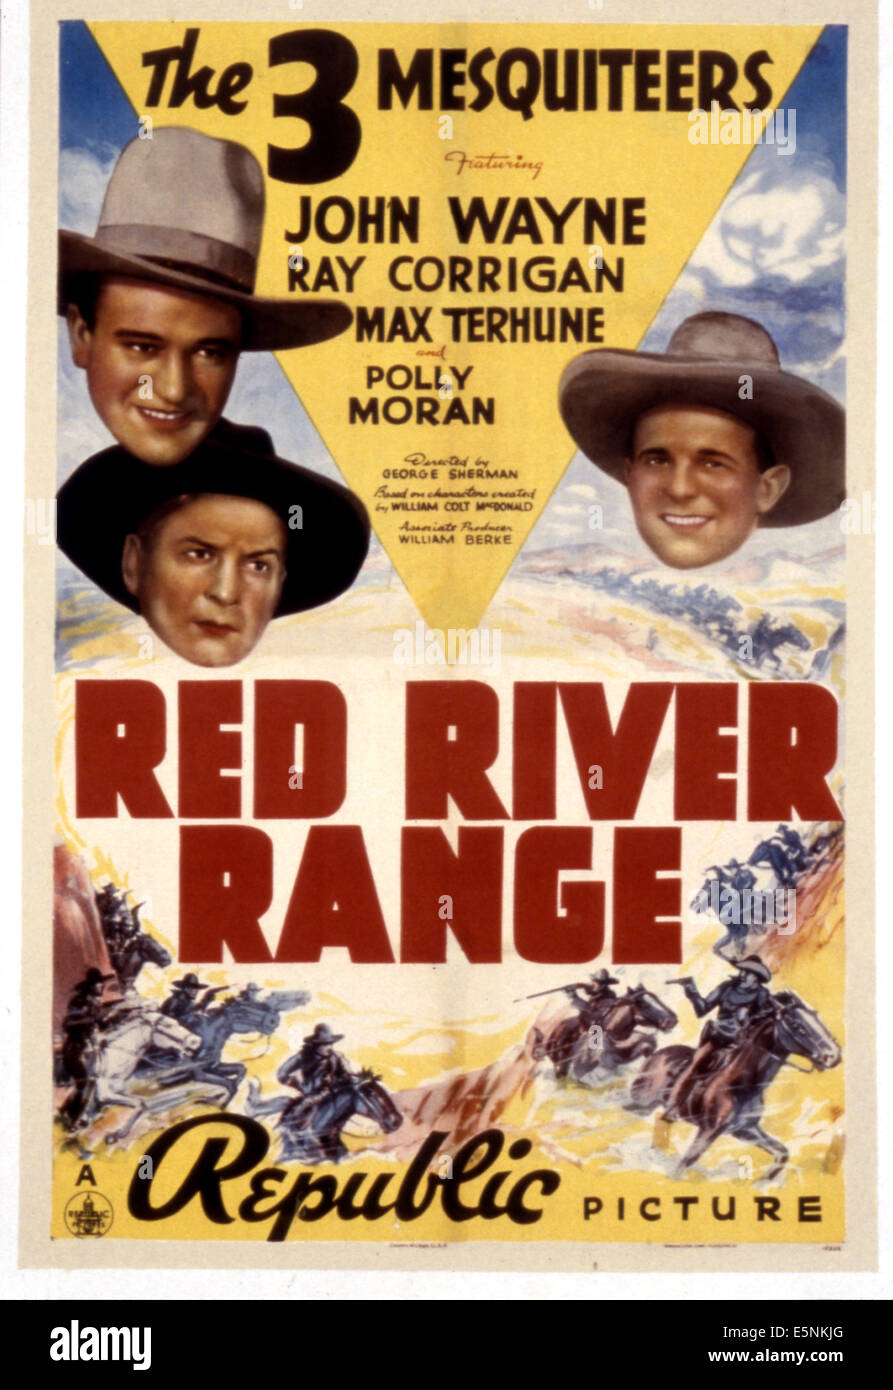 RED RIVER RANGE, John Wayne, Max Terhune, Ray Corrigan, movie poster art, 1938. Stock Photo